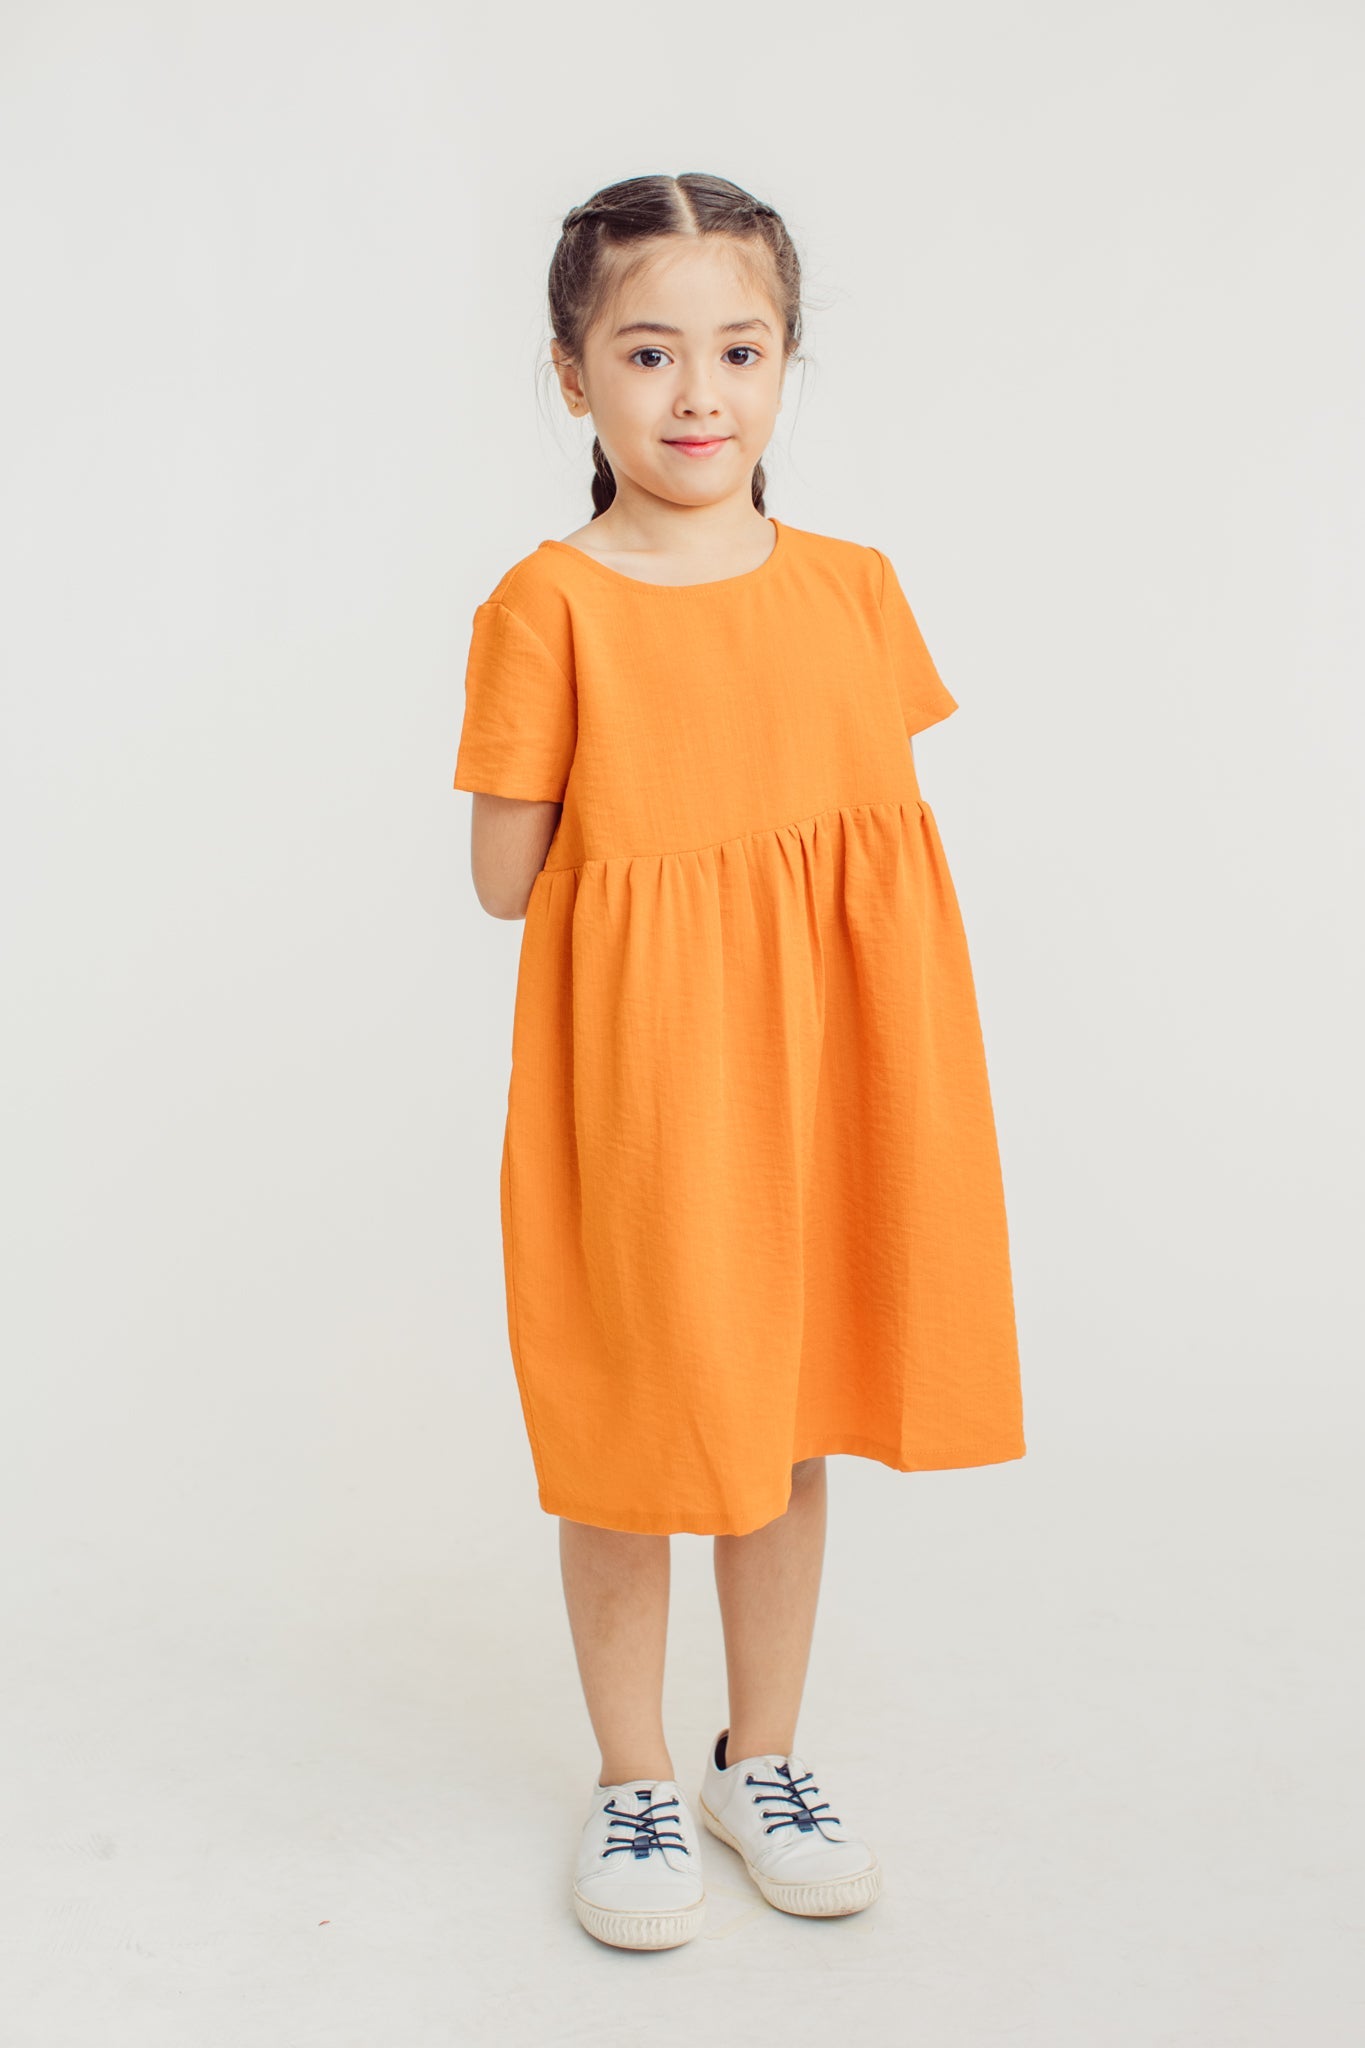 Erica Mandarin Girls Short Sleeve Dress - Mossimo PH